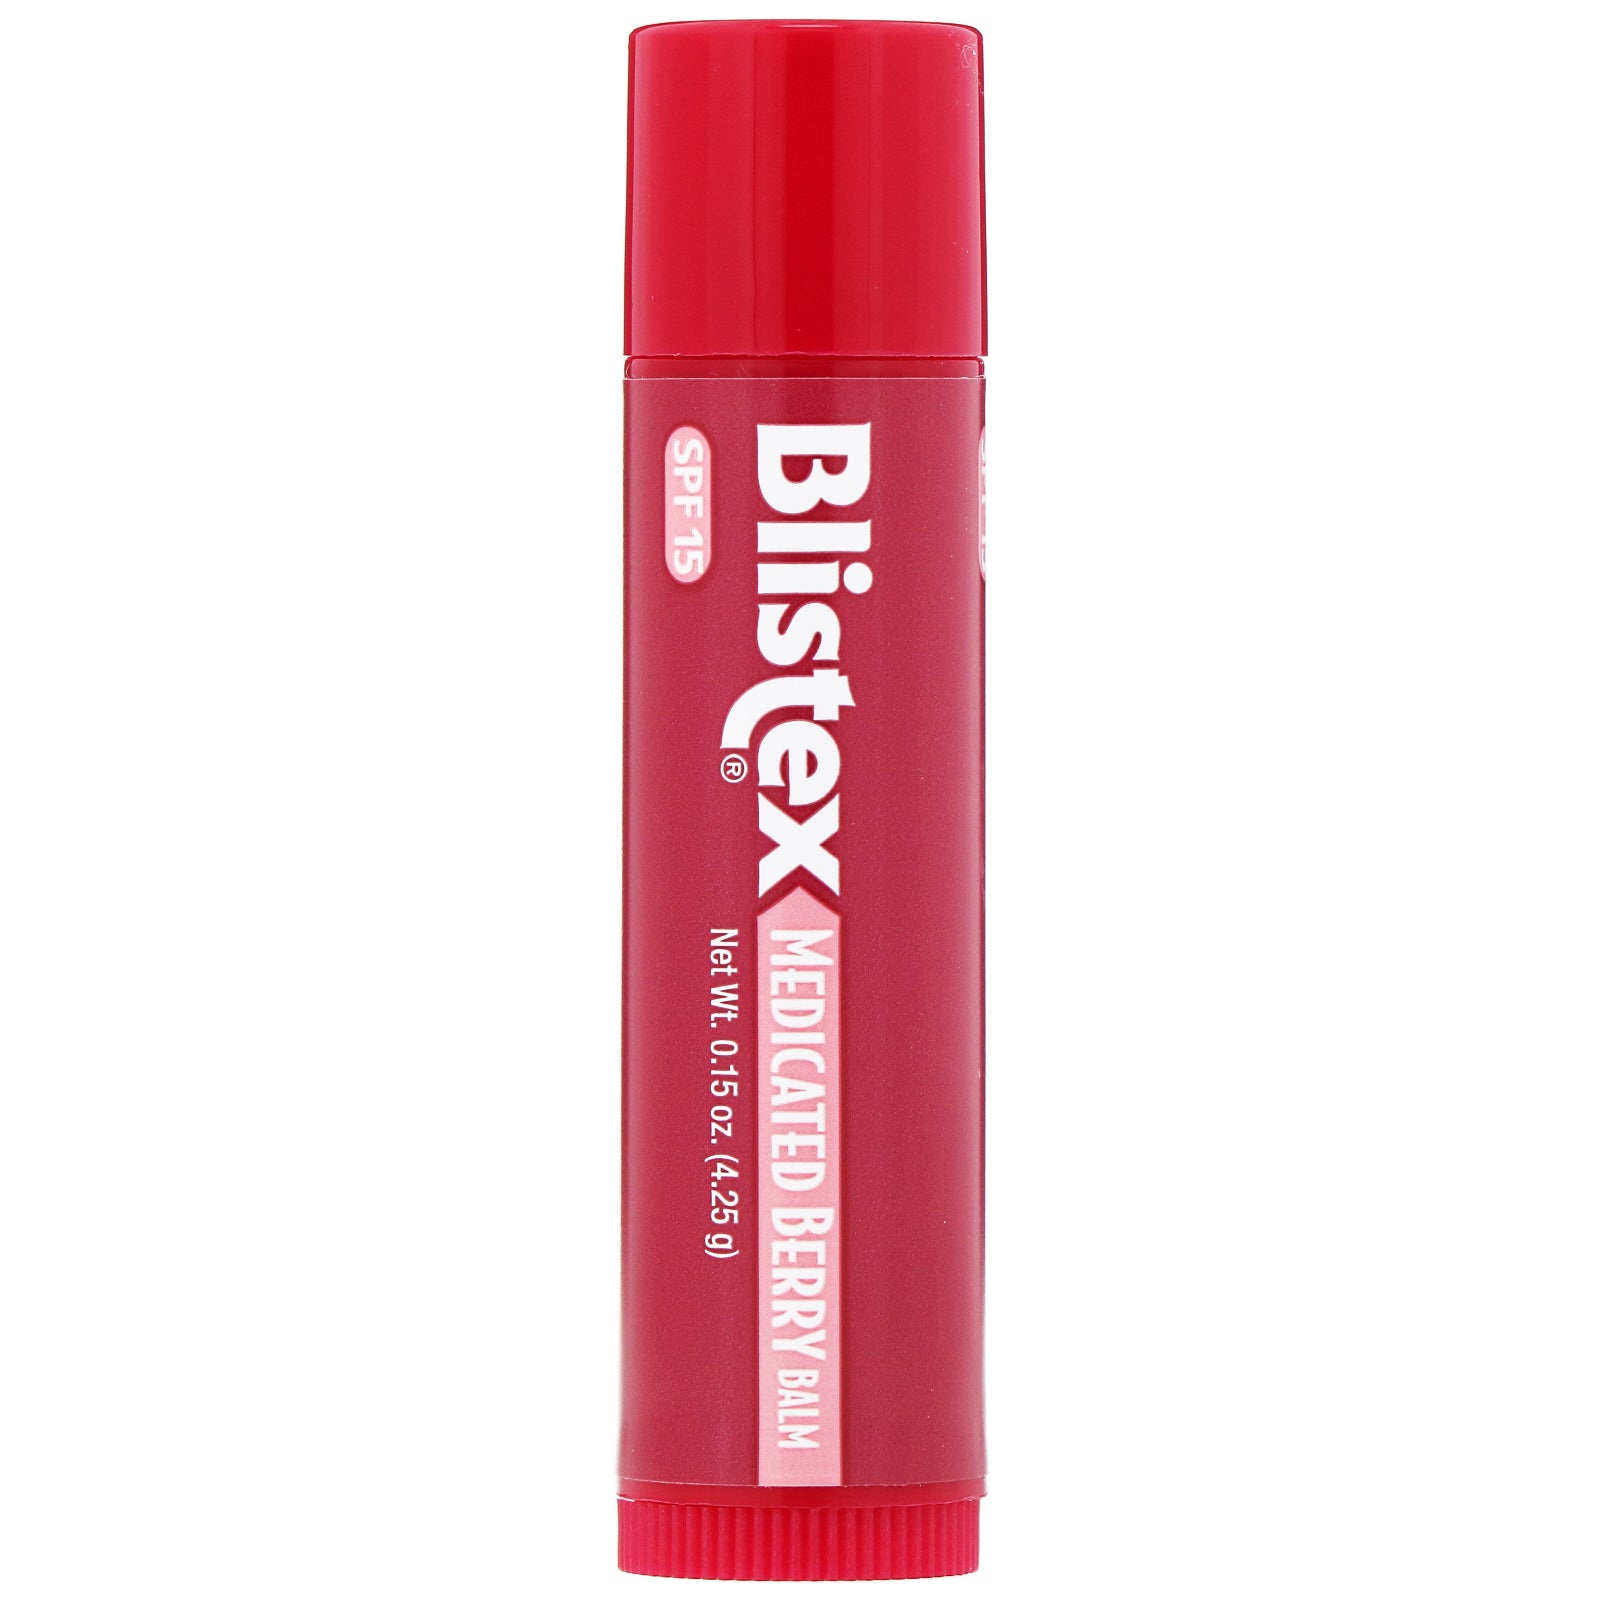 Blistex, Lip Protectant/Sunscreen, SPF 15, Medicated Berry Balm, .15 oz (4.25 g)